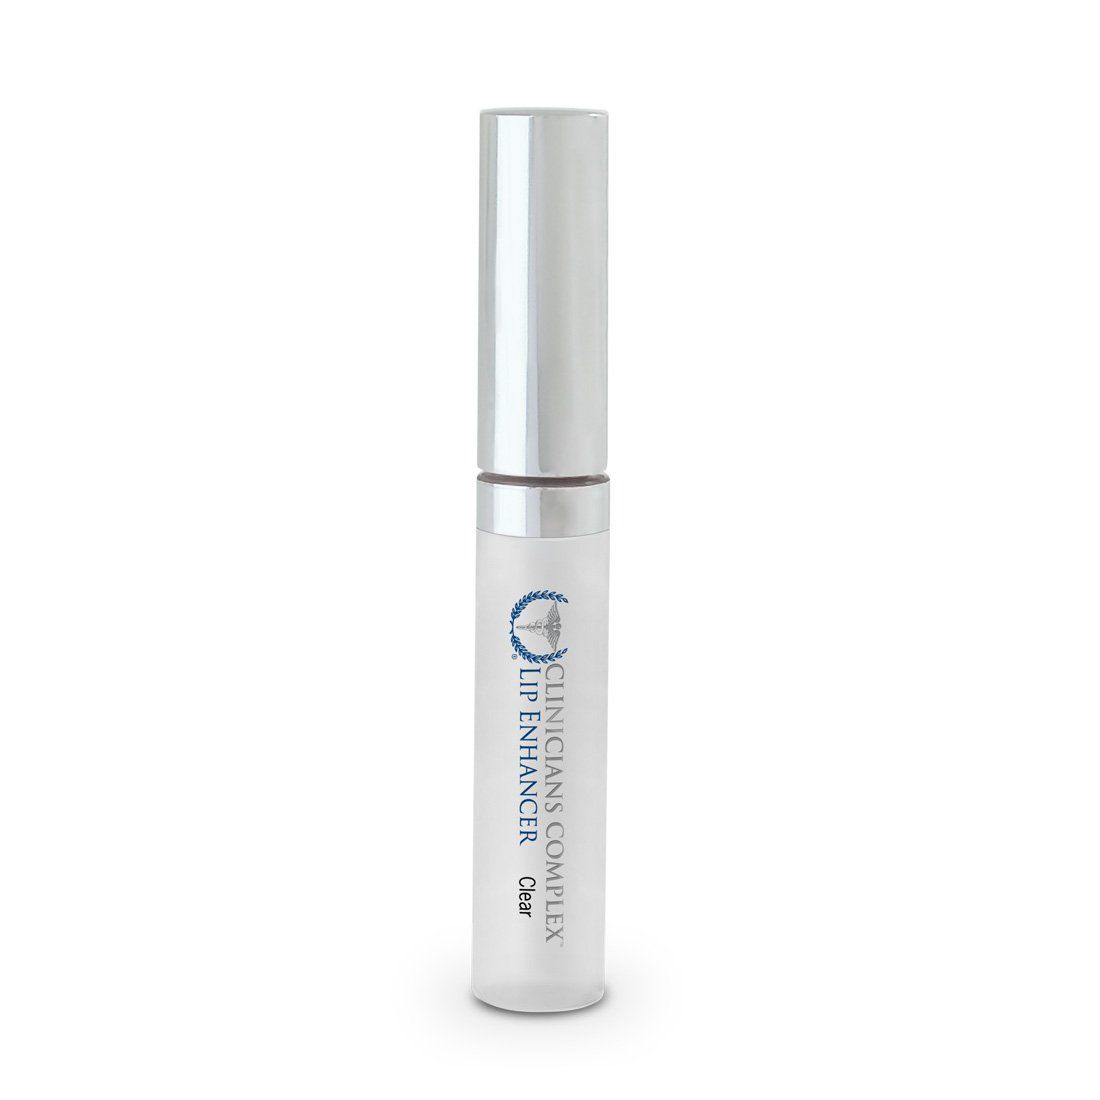 a tube of clinicians complex lip enhancer clear